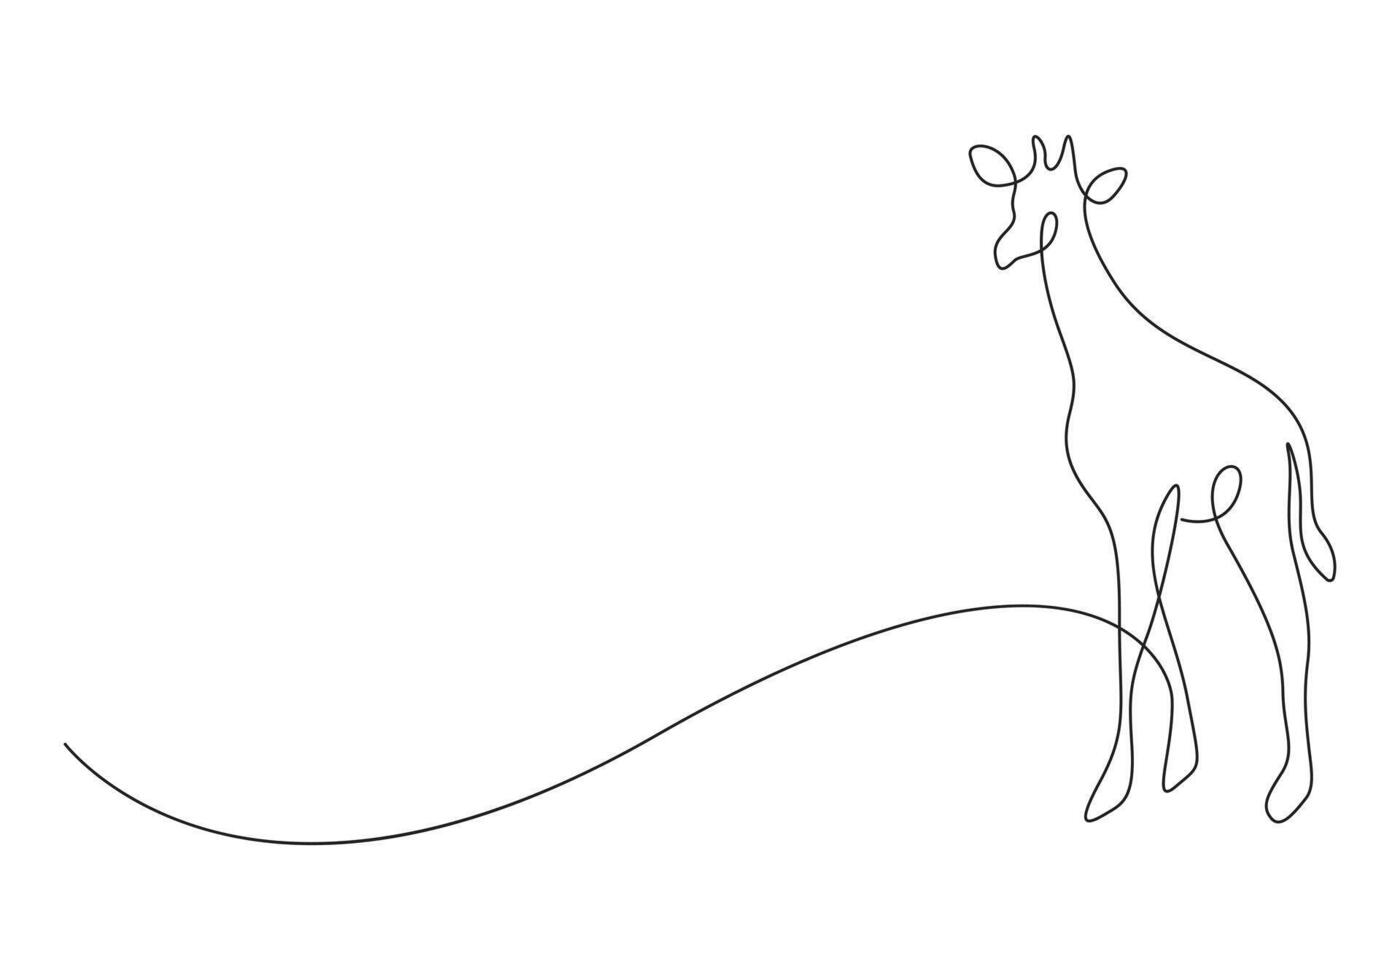 giraff i ett kontinuerlig linje teckning fri illustration vektor